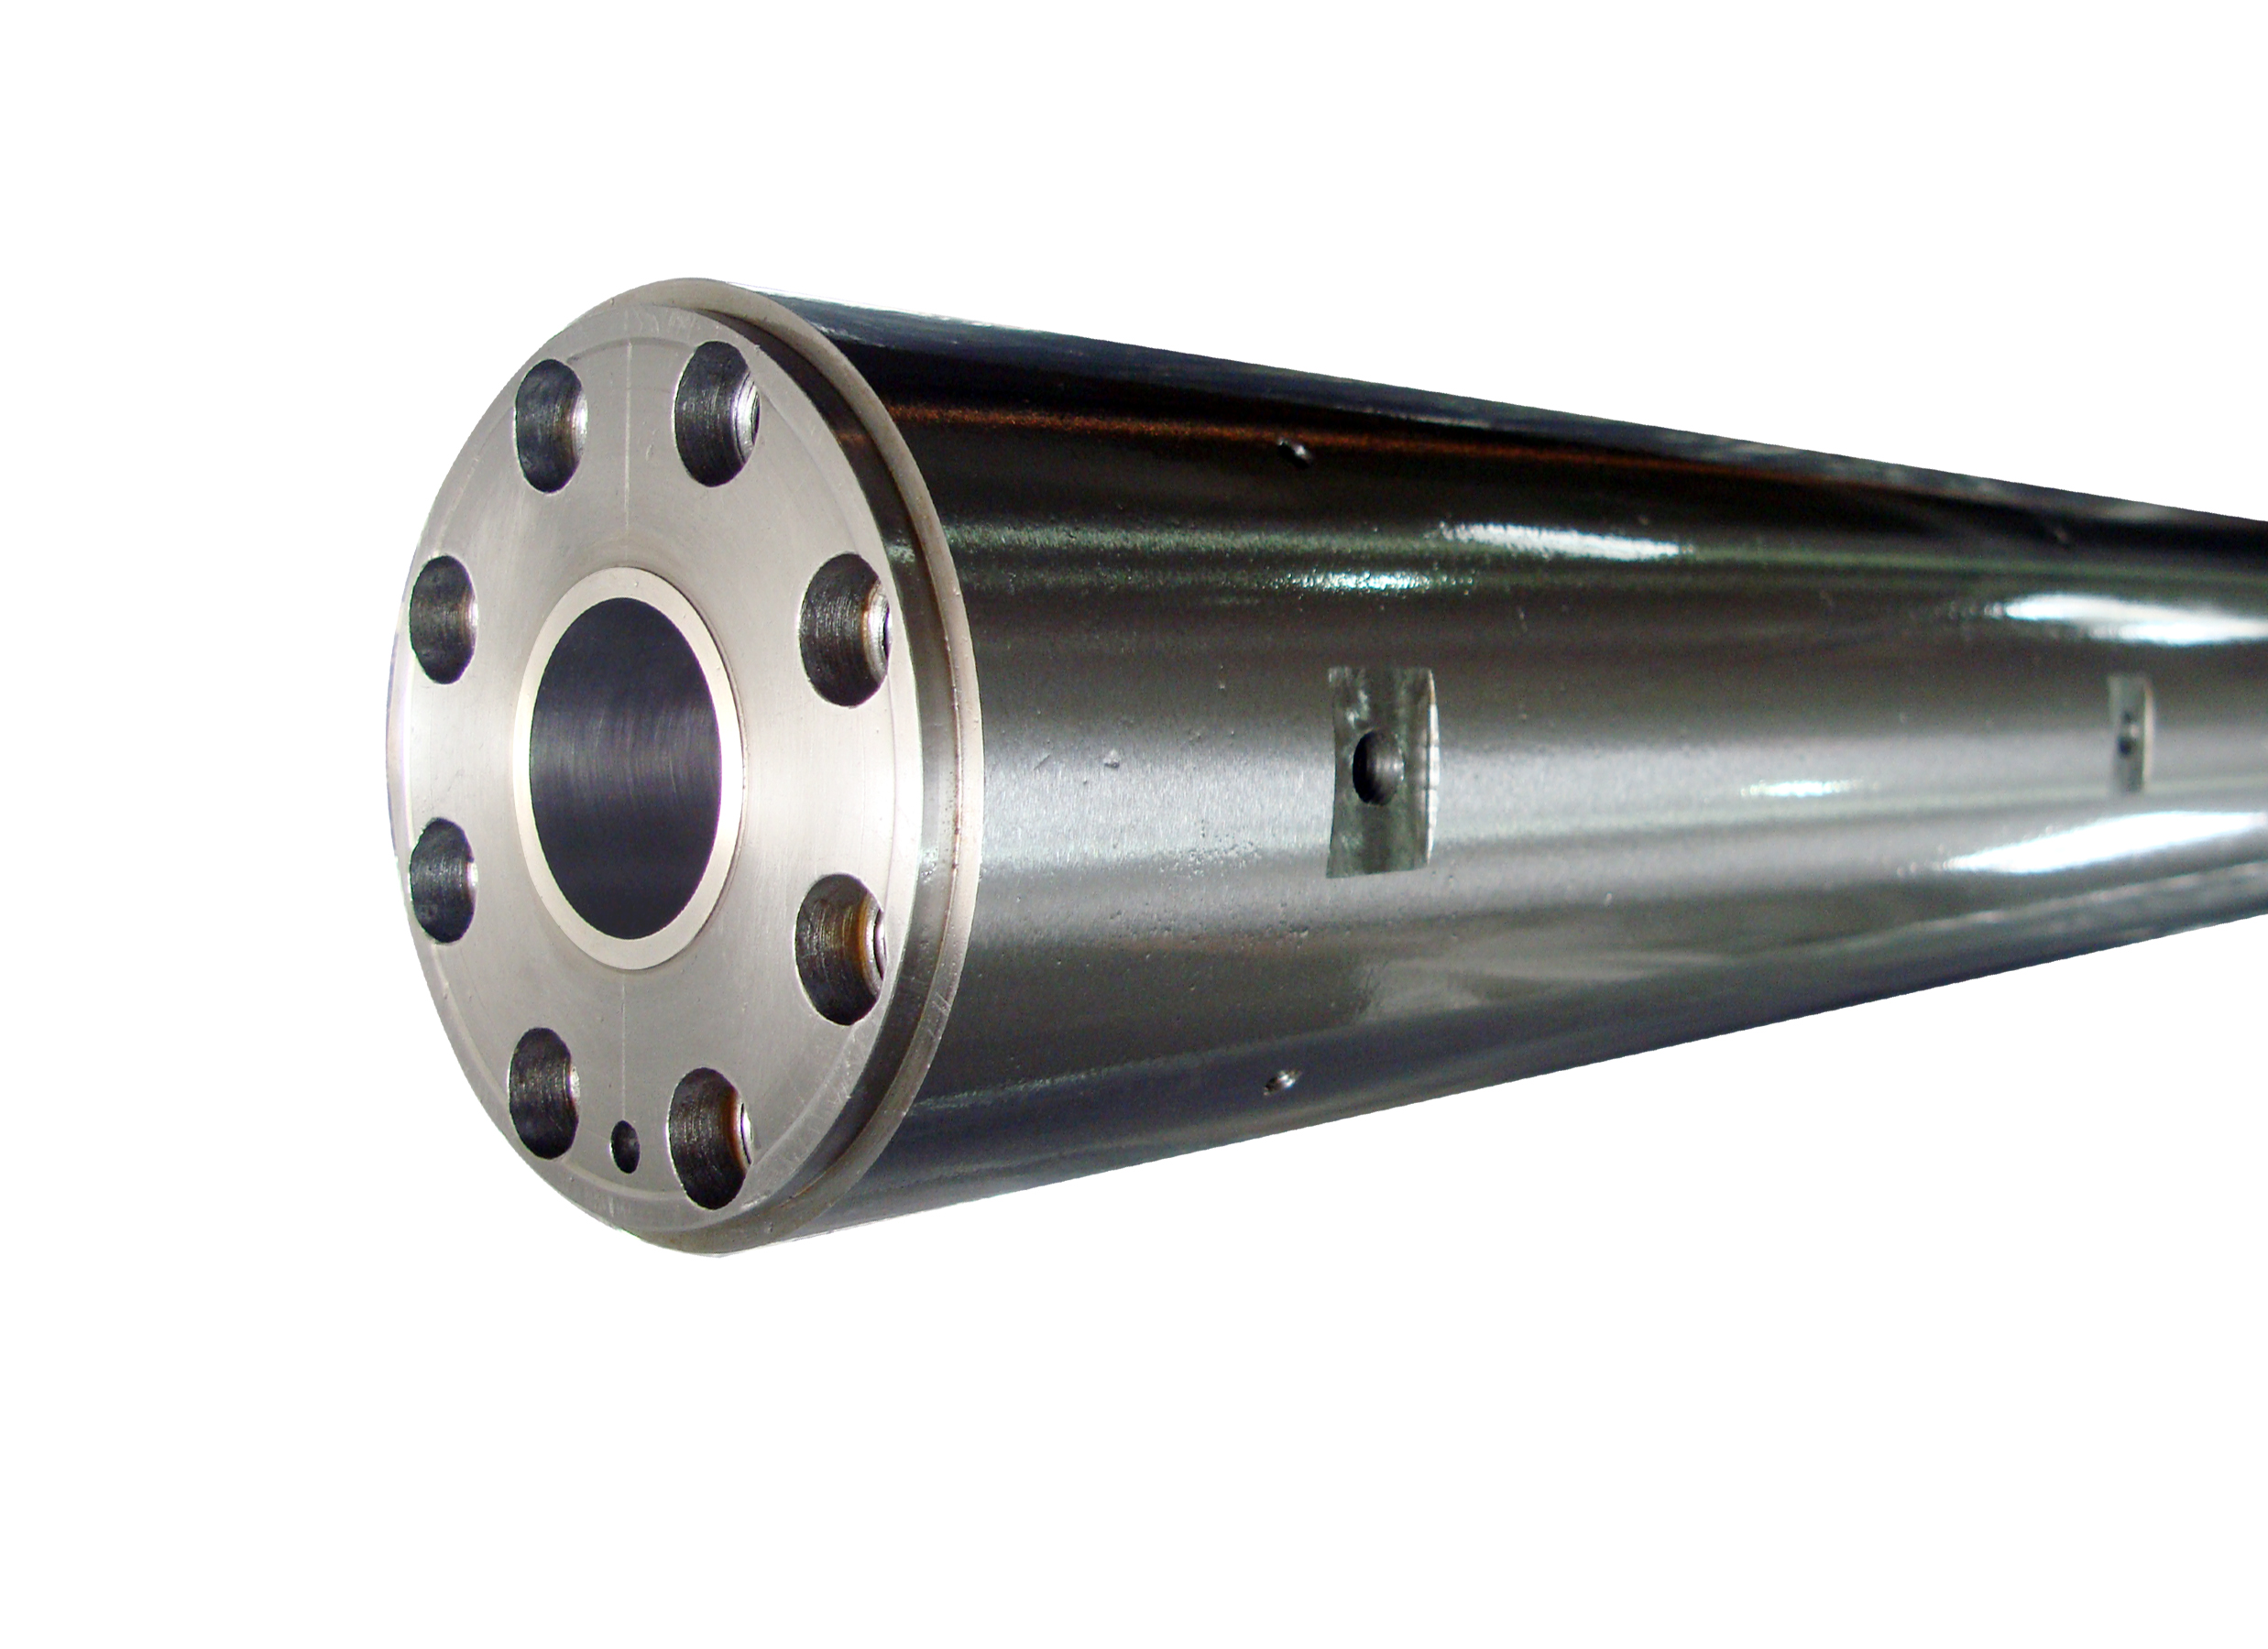 High quality Fe-based alloy barrel